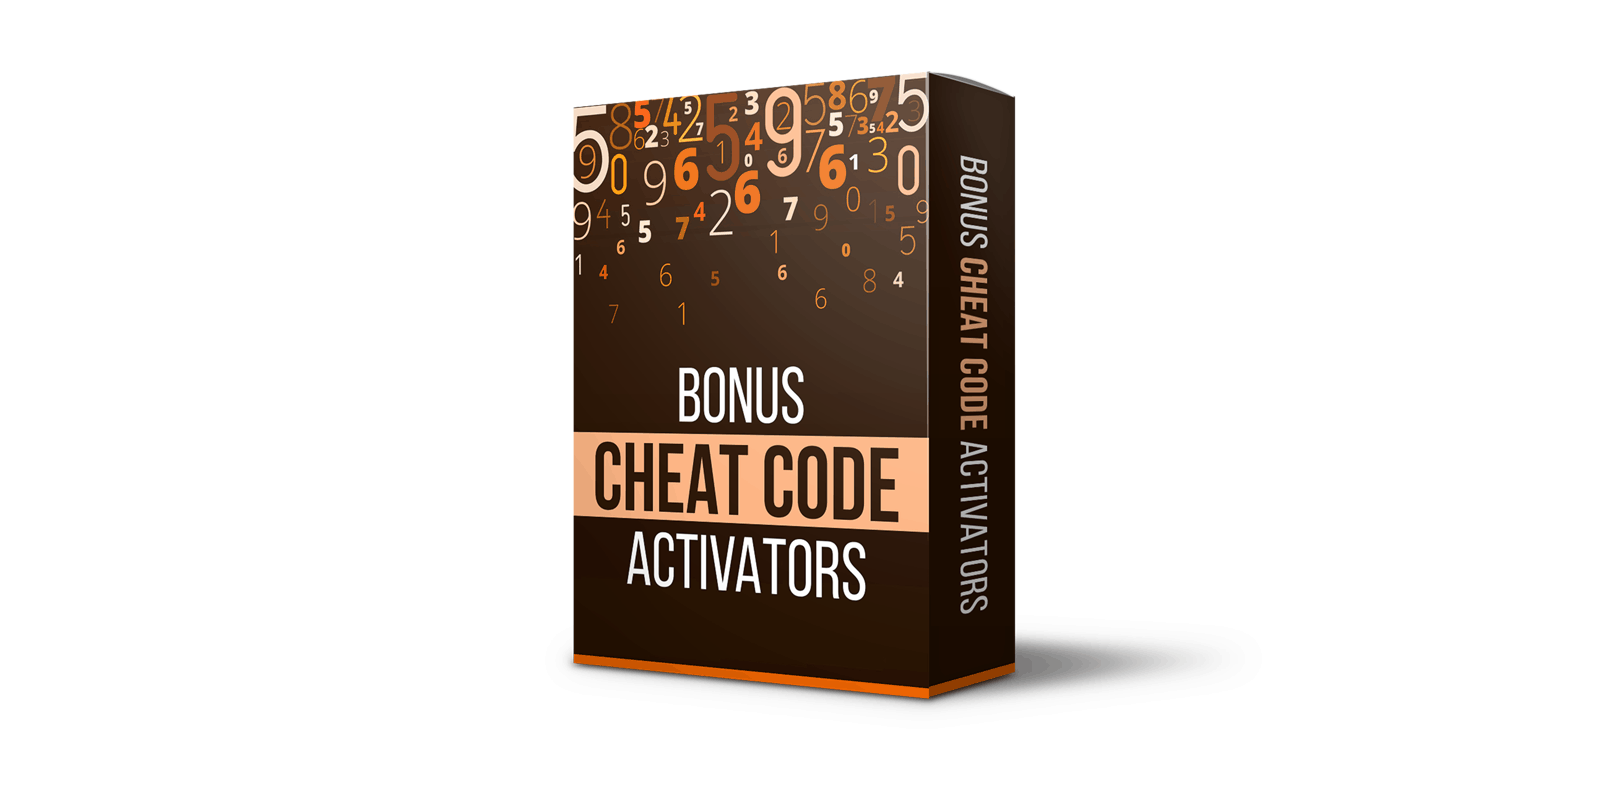 Cheat Code Activators bonus